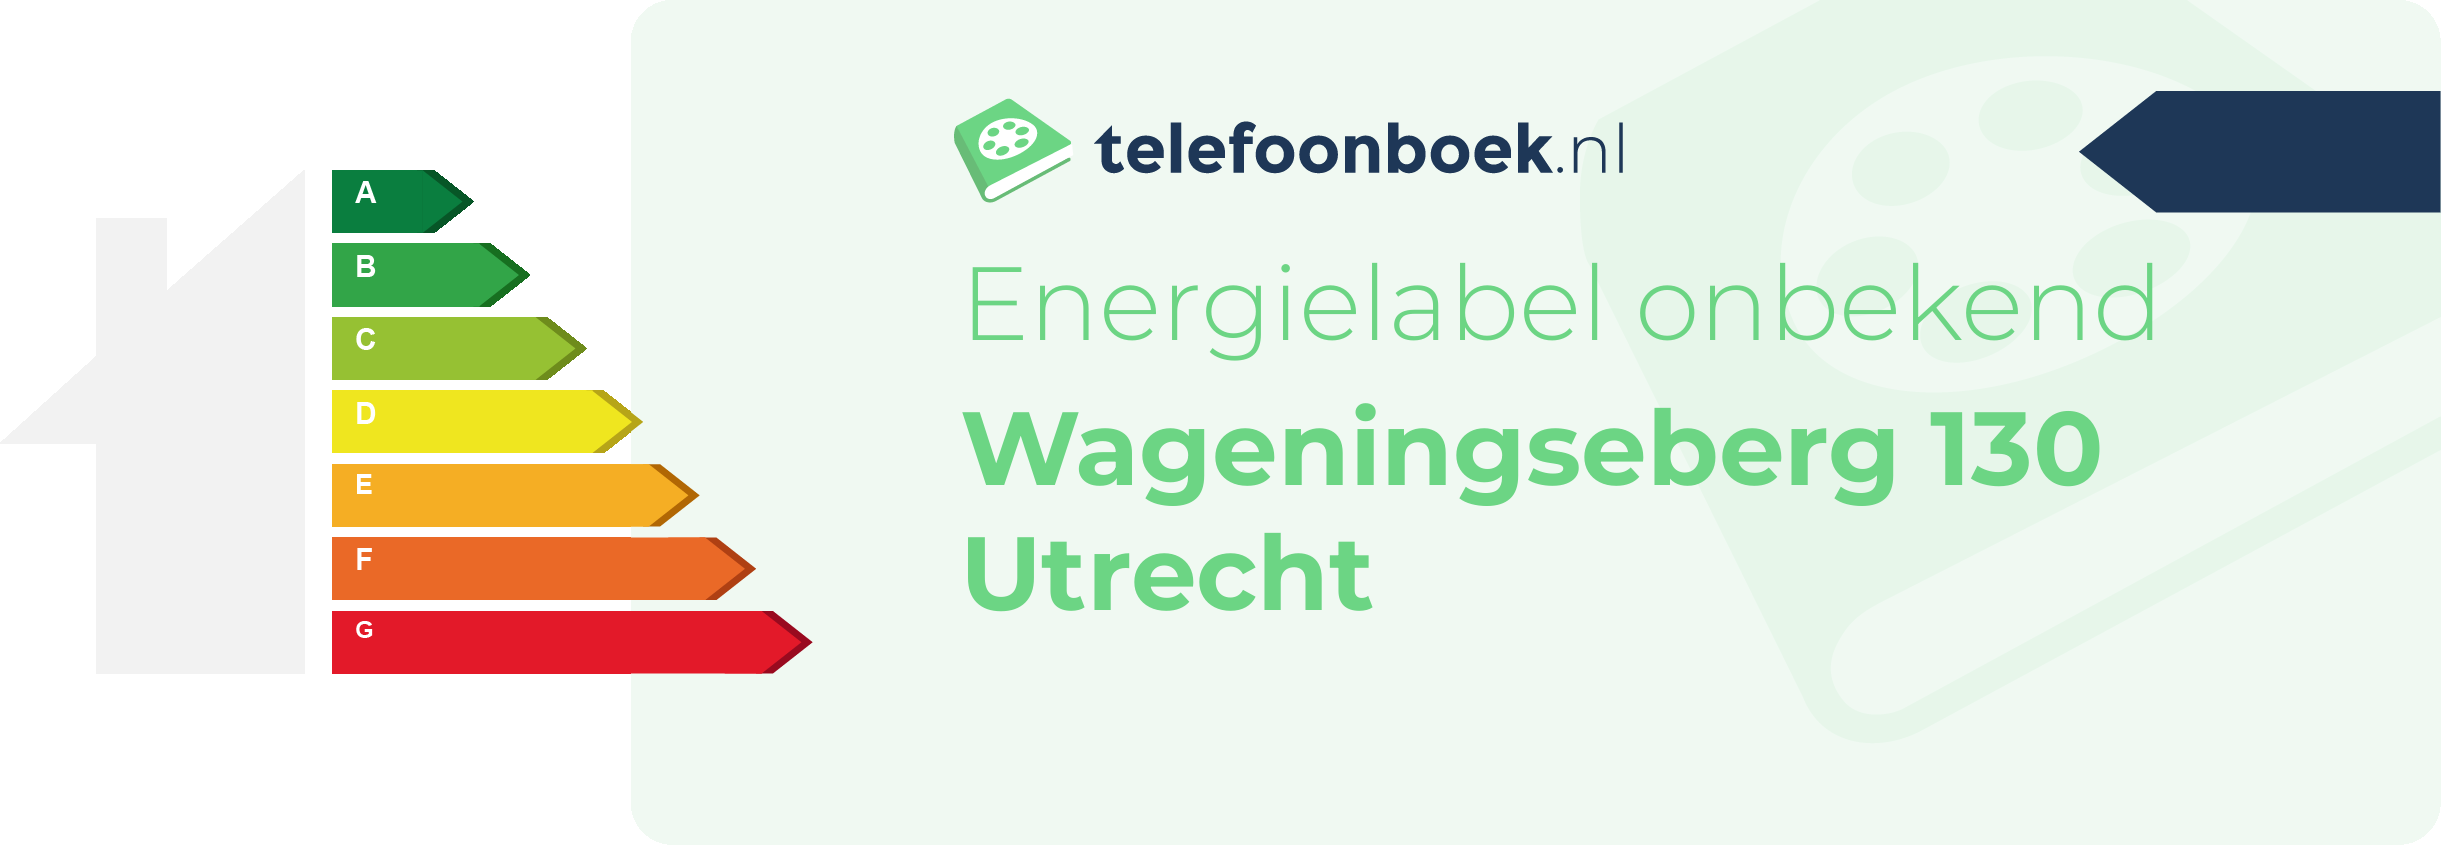 Energielabel Wageningseberg 130 Utrecht